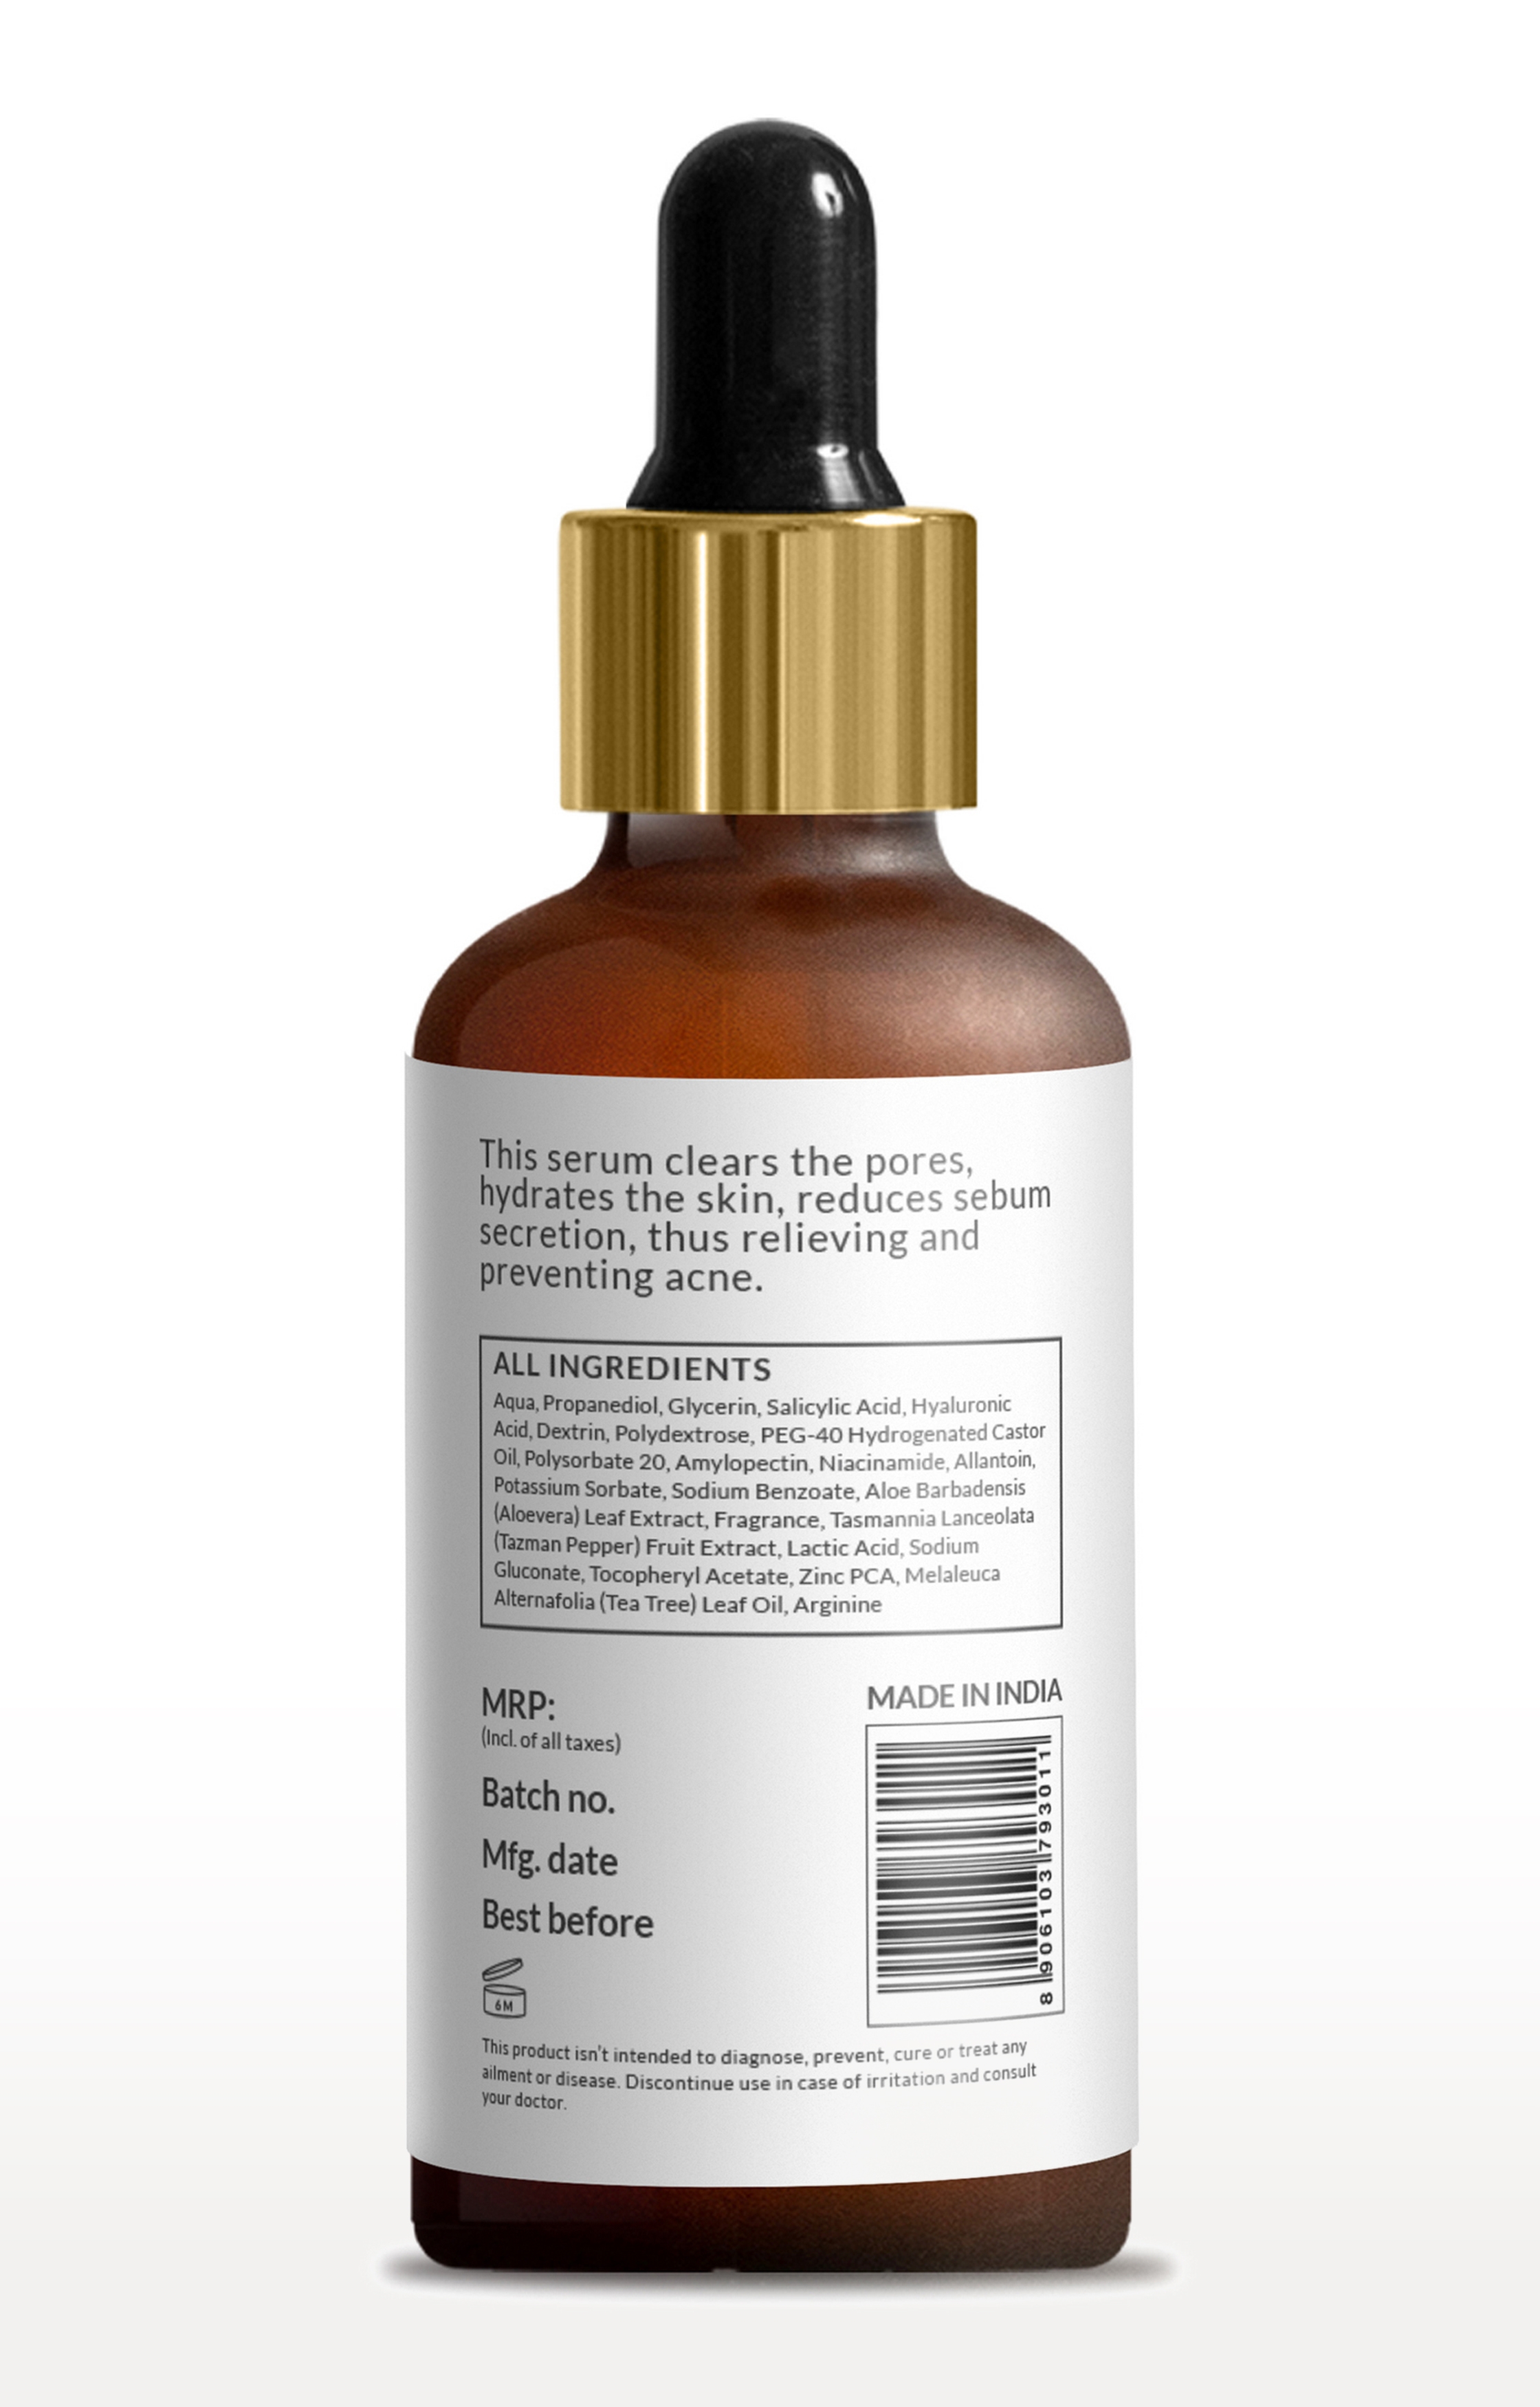 Sirona Anti Acne Face Serum - 30 Ml With Tee Tree Oil, Salicylic Acid, Hyaluronic Acid And Vitamin E